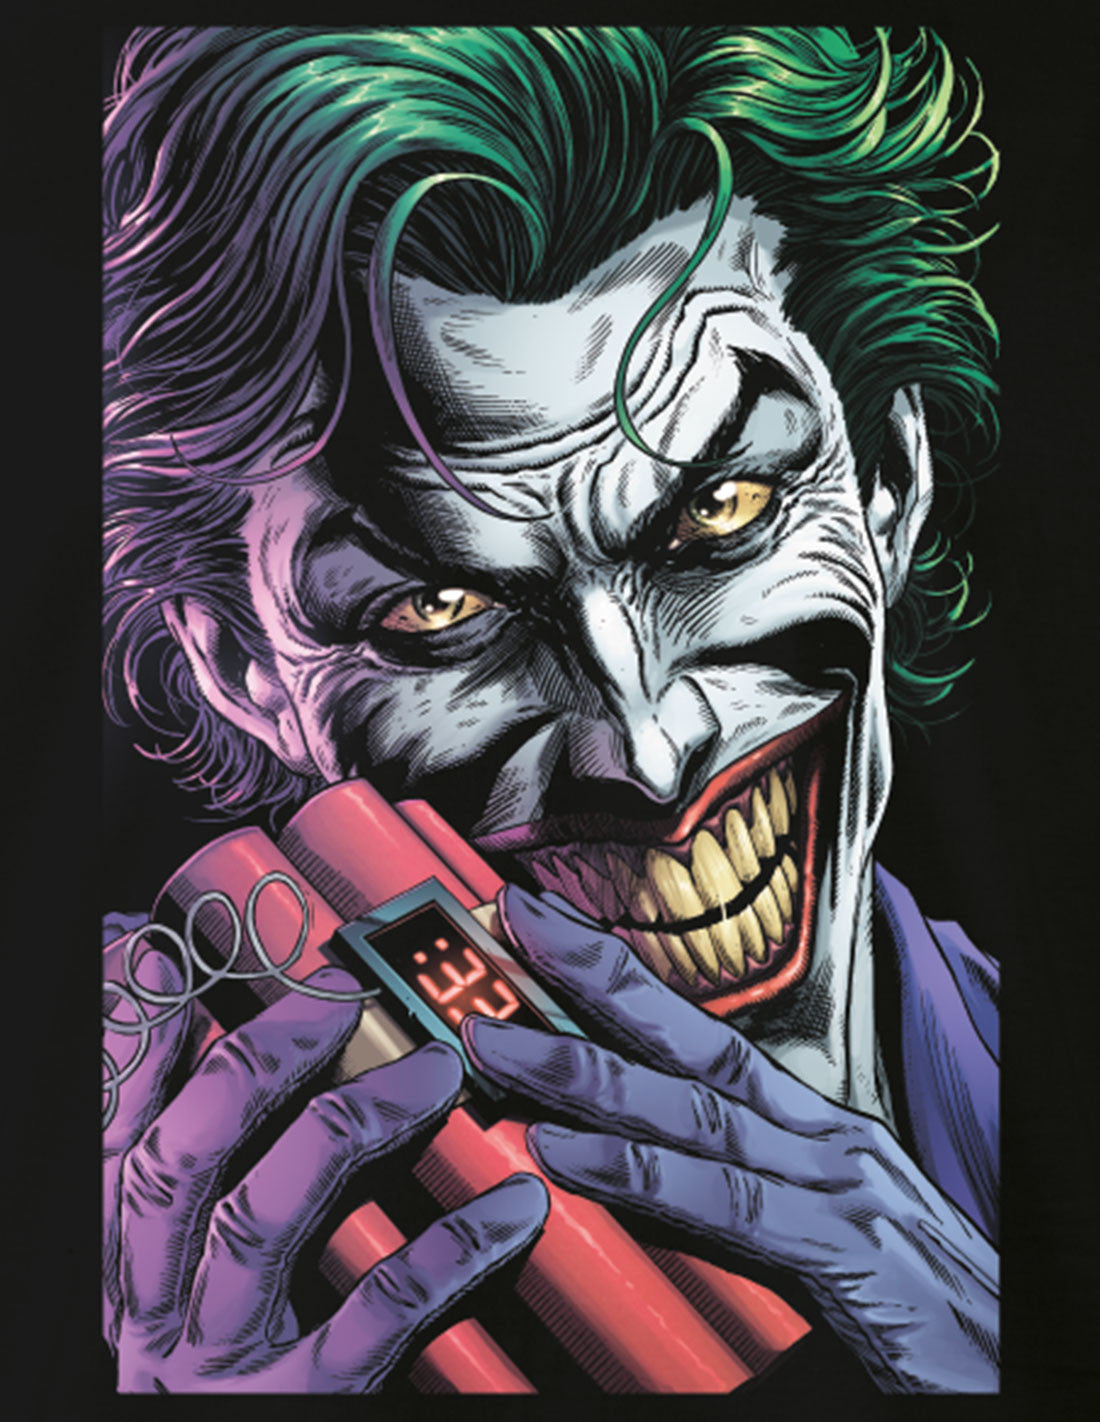 T-shirt The Joker DC Comics - Dynamite